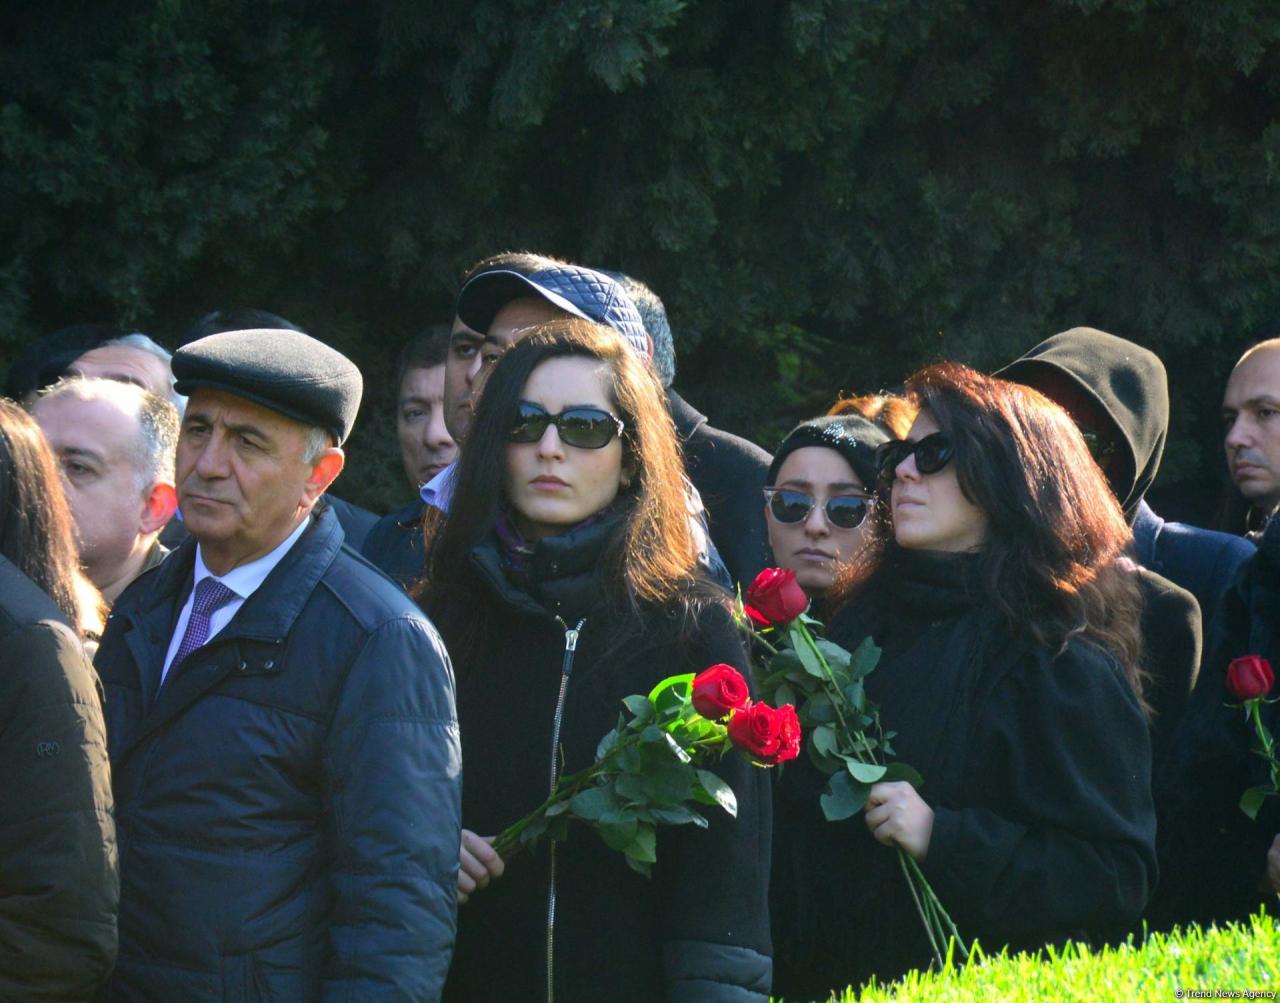 Azerbaijani public reveres memory of great leader Heydar Aliyev [PHOTO]